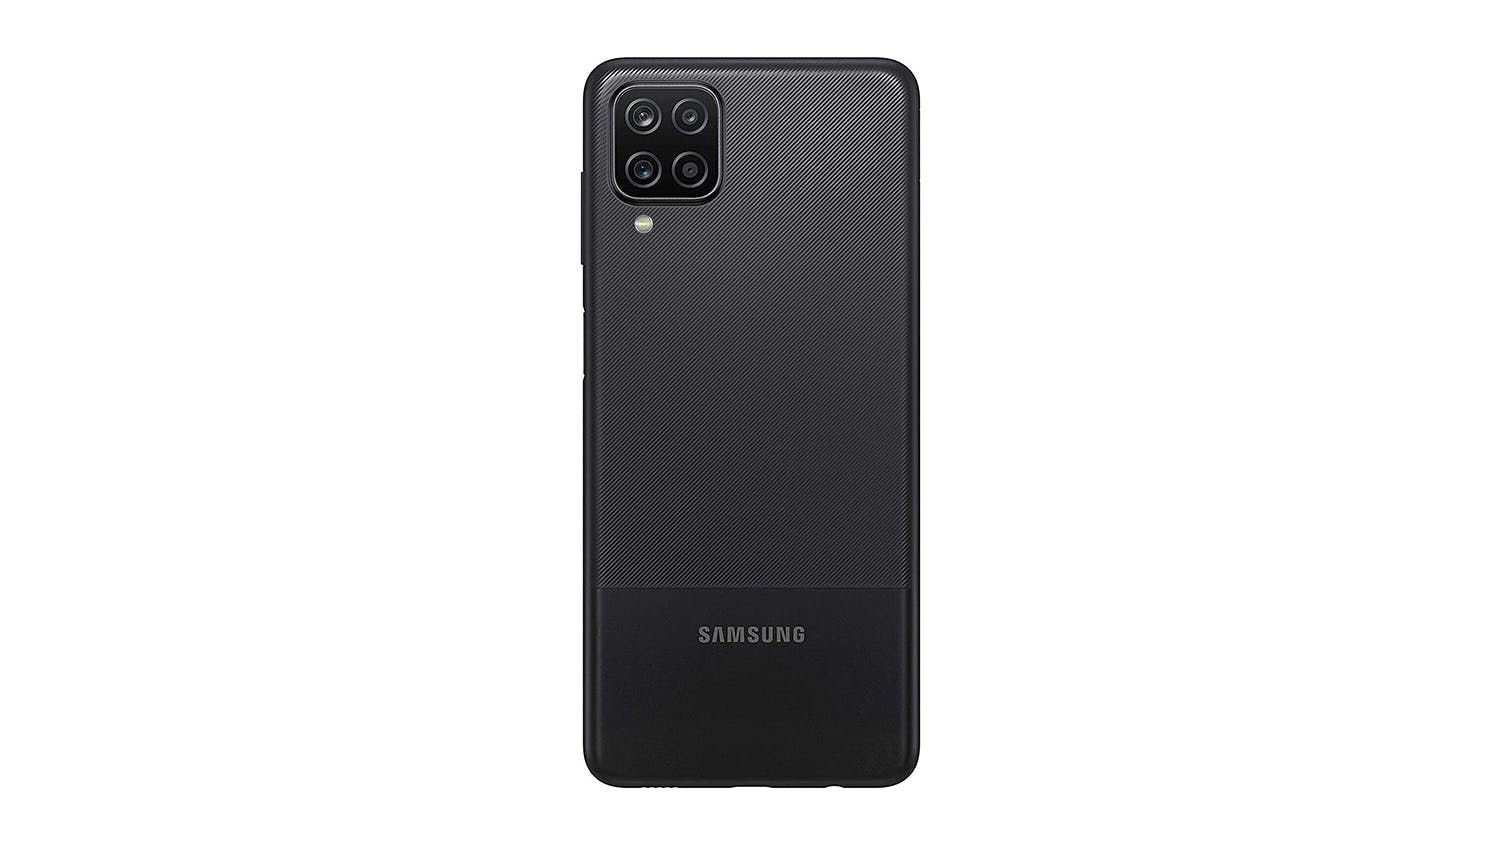 Samsung Galaxy A12 128GB Smartphone - Black (2degrees/Open Network) + Prepay SIM Card